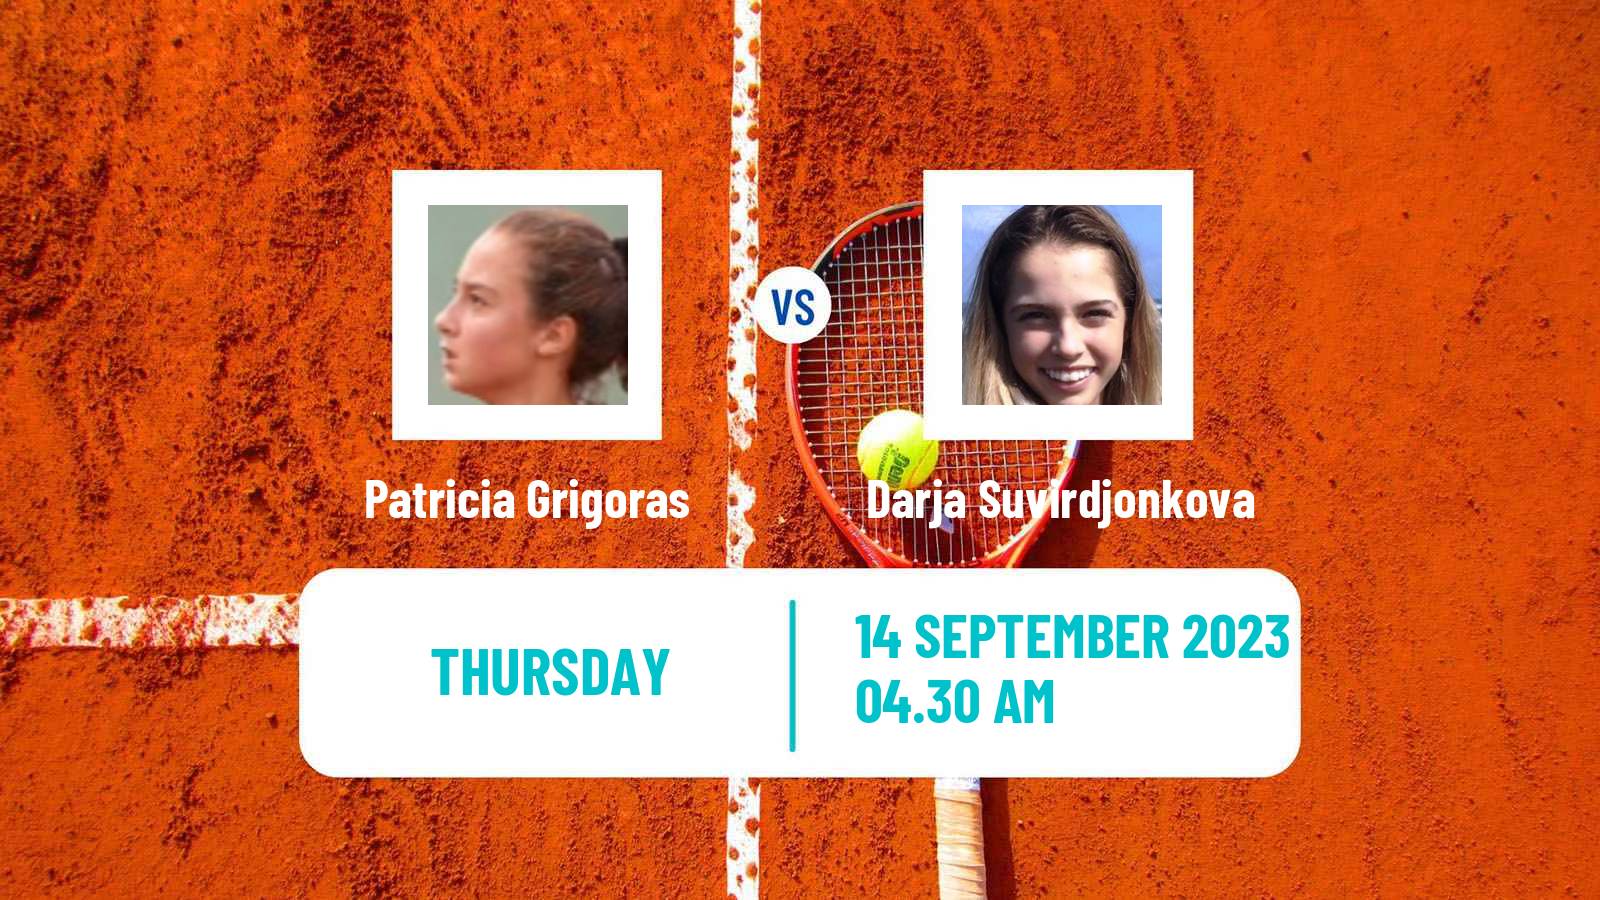 Tennis ITF W15 Monastir 32 Women Patricia Grigoras - Darja Suvirdjonkova